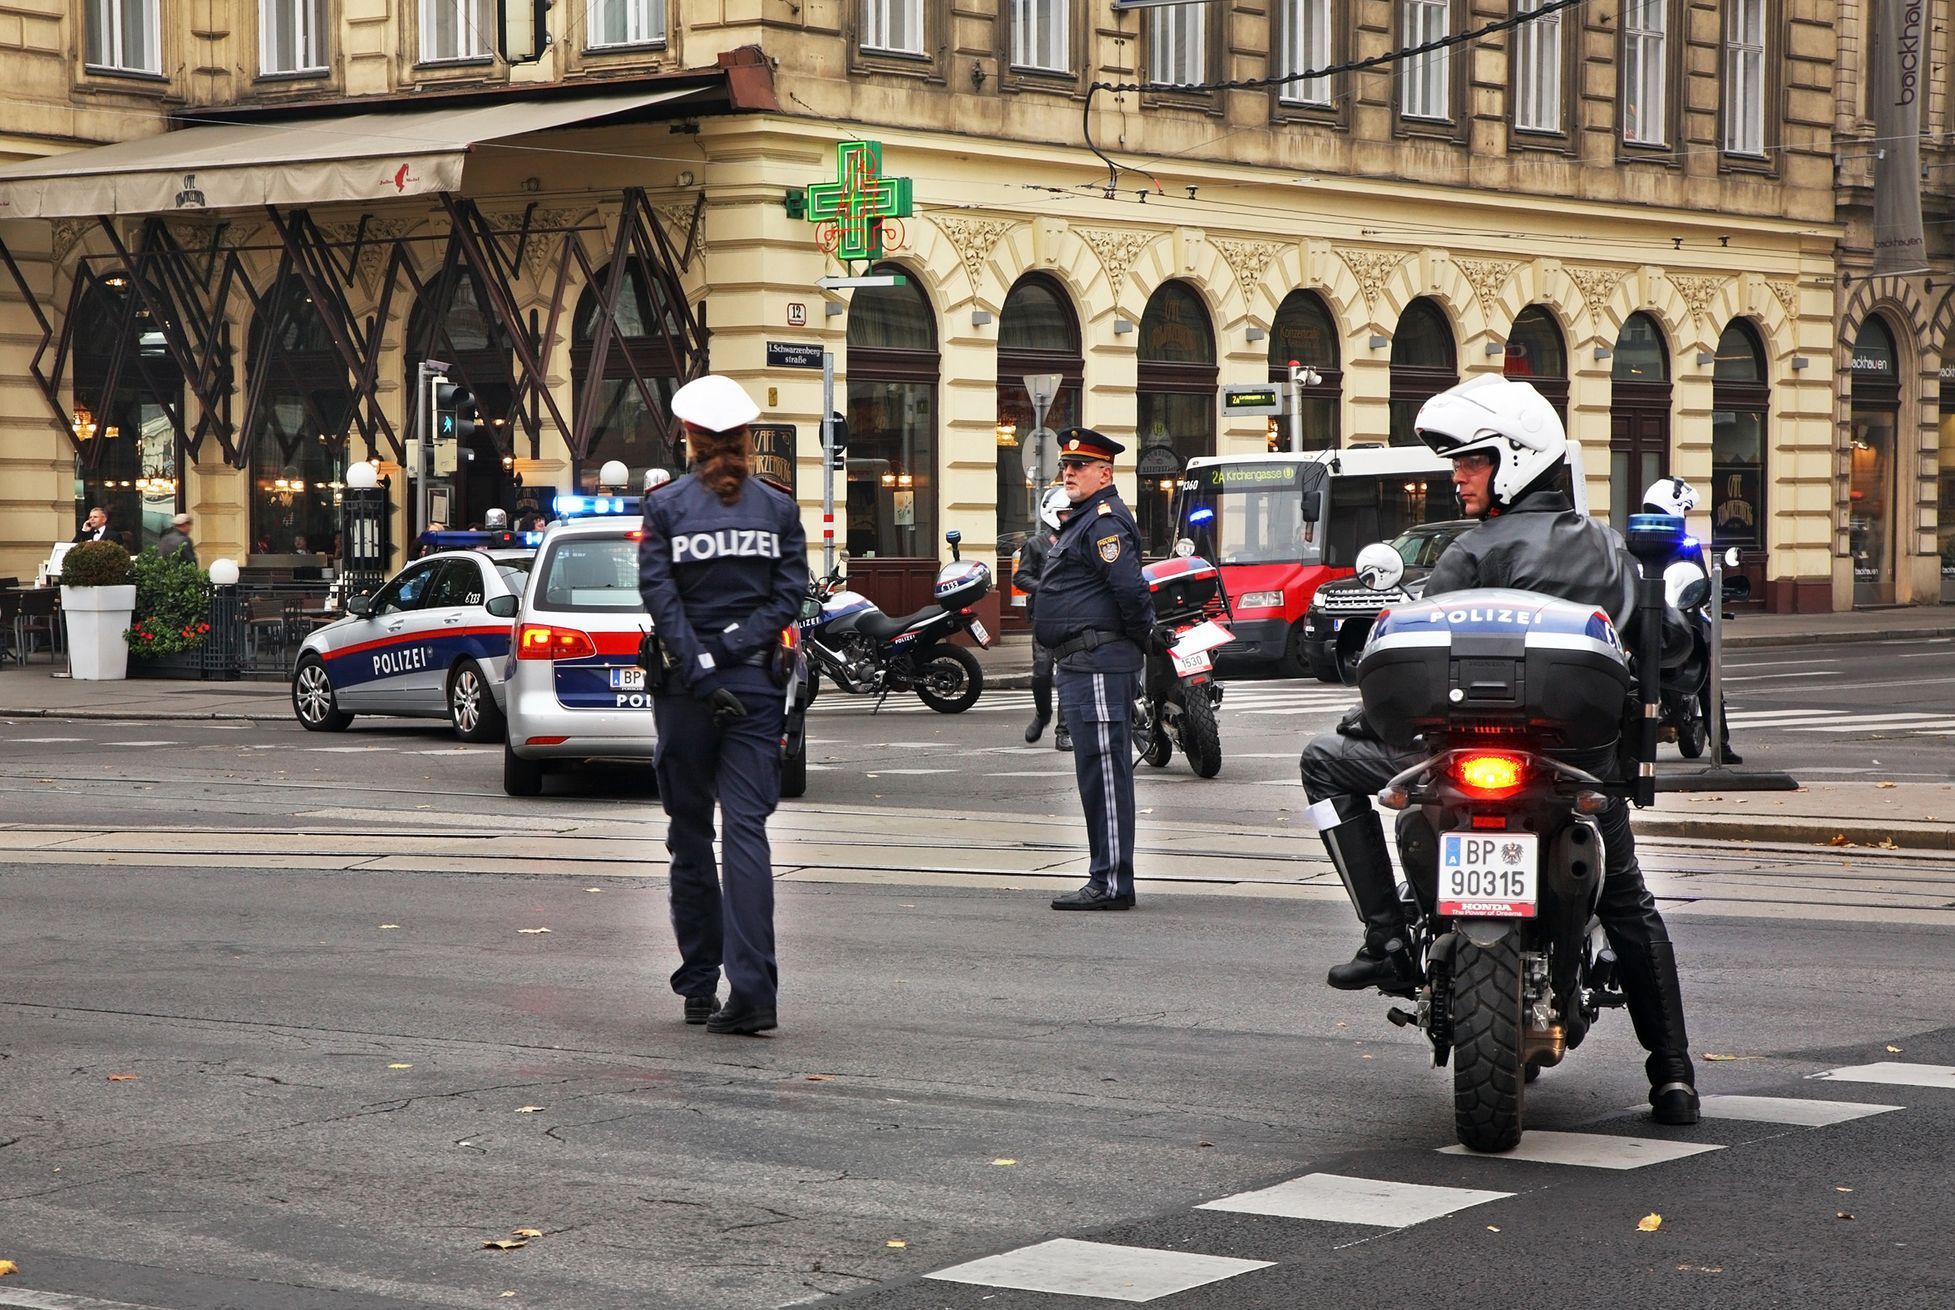 Ilustrační fotografie, policie, Rakousko, 2018